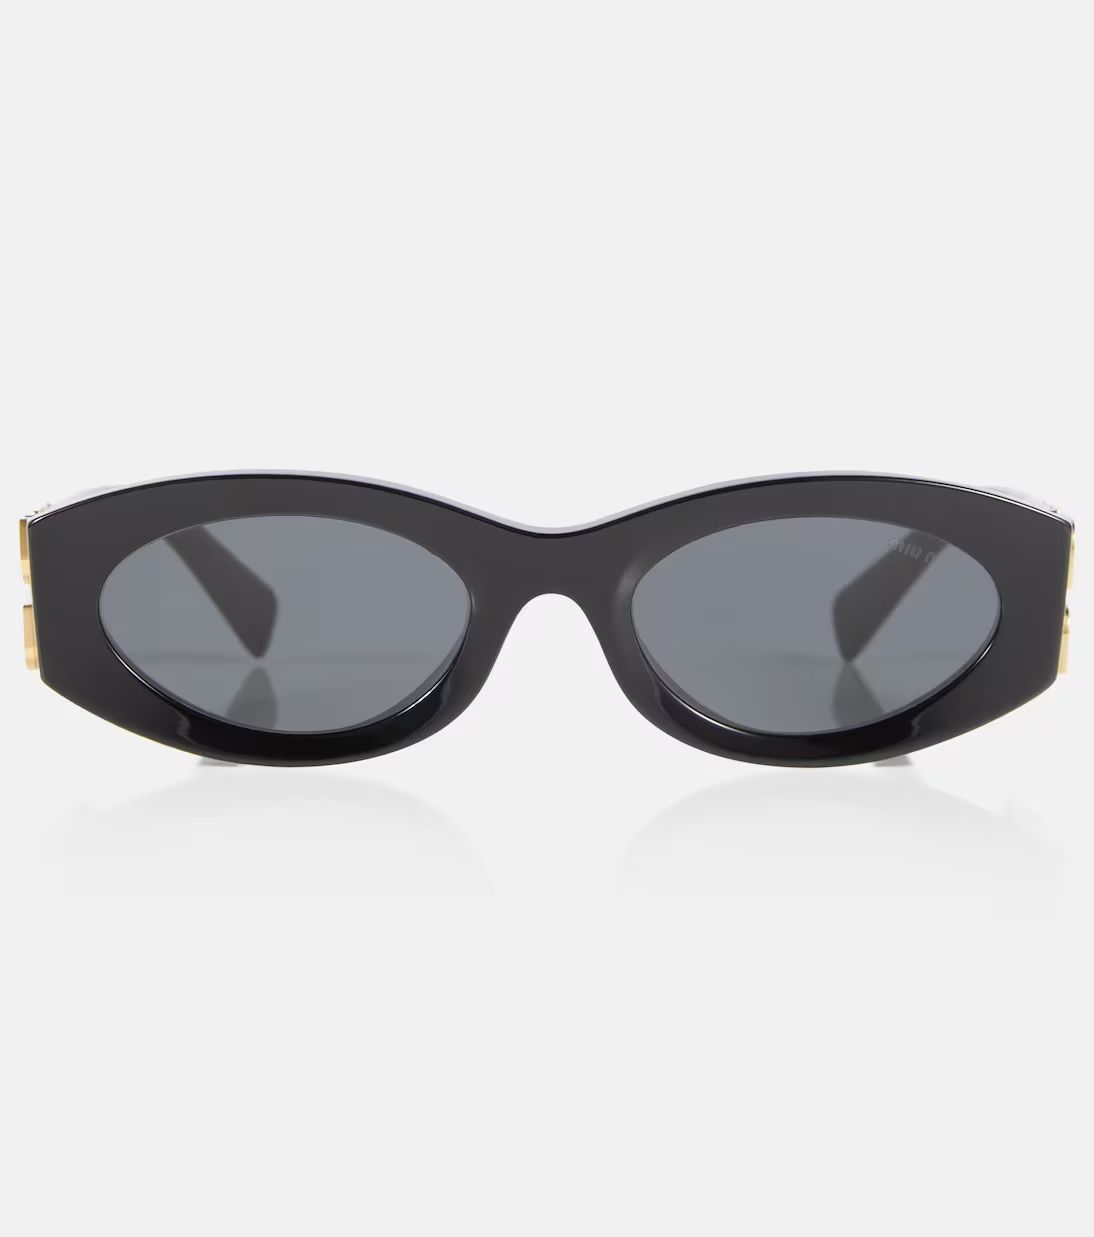 Oval sunglasses | Mytheresa (UK)